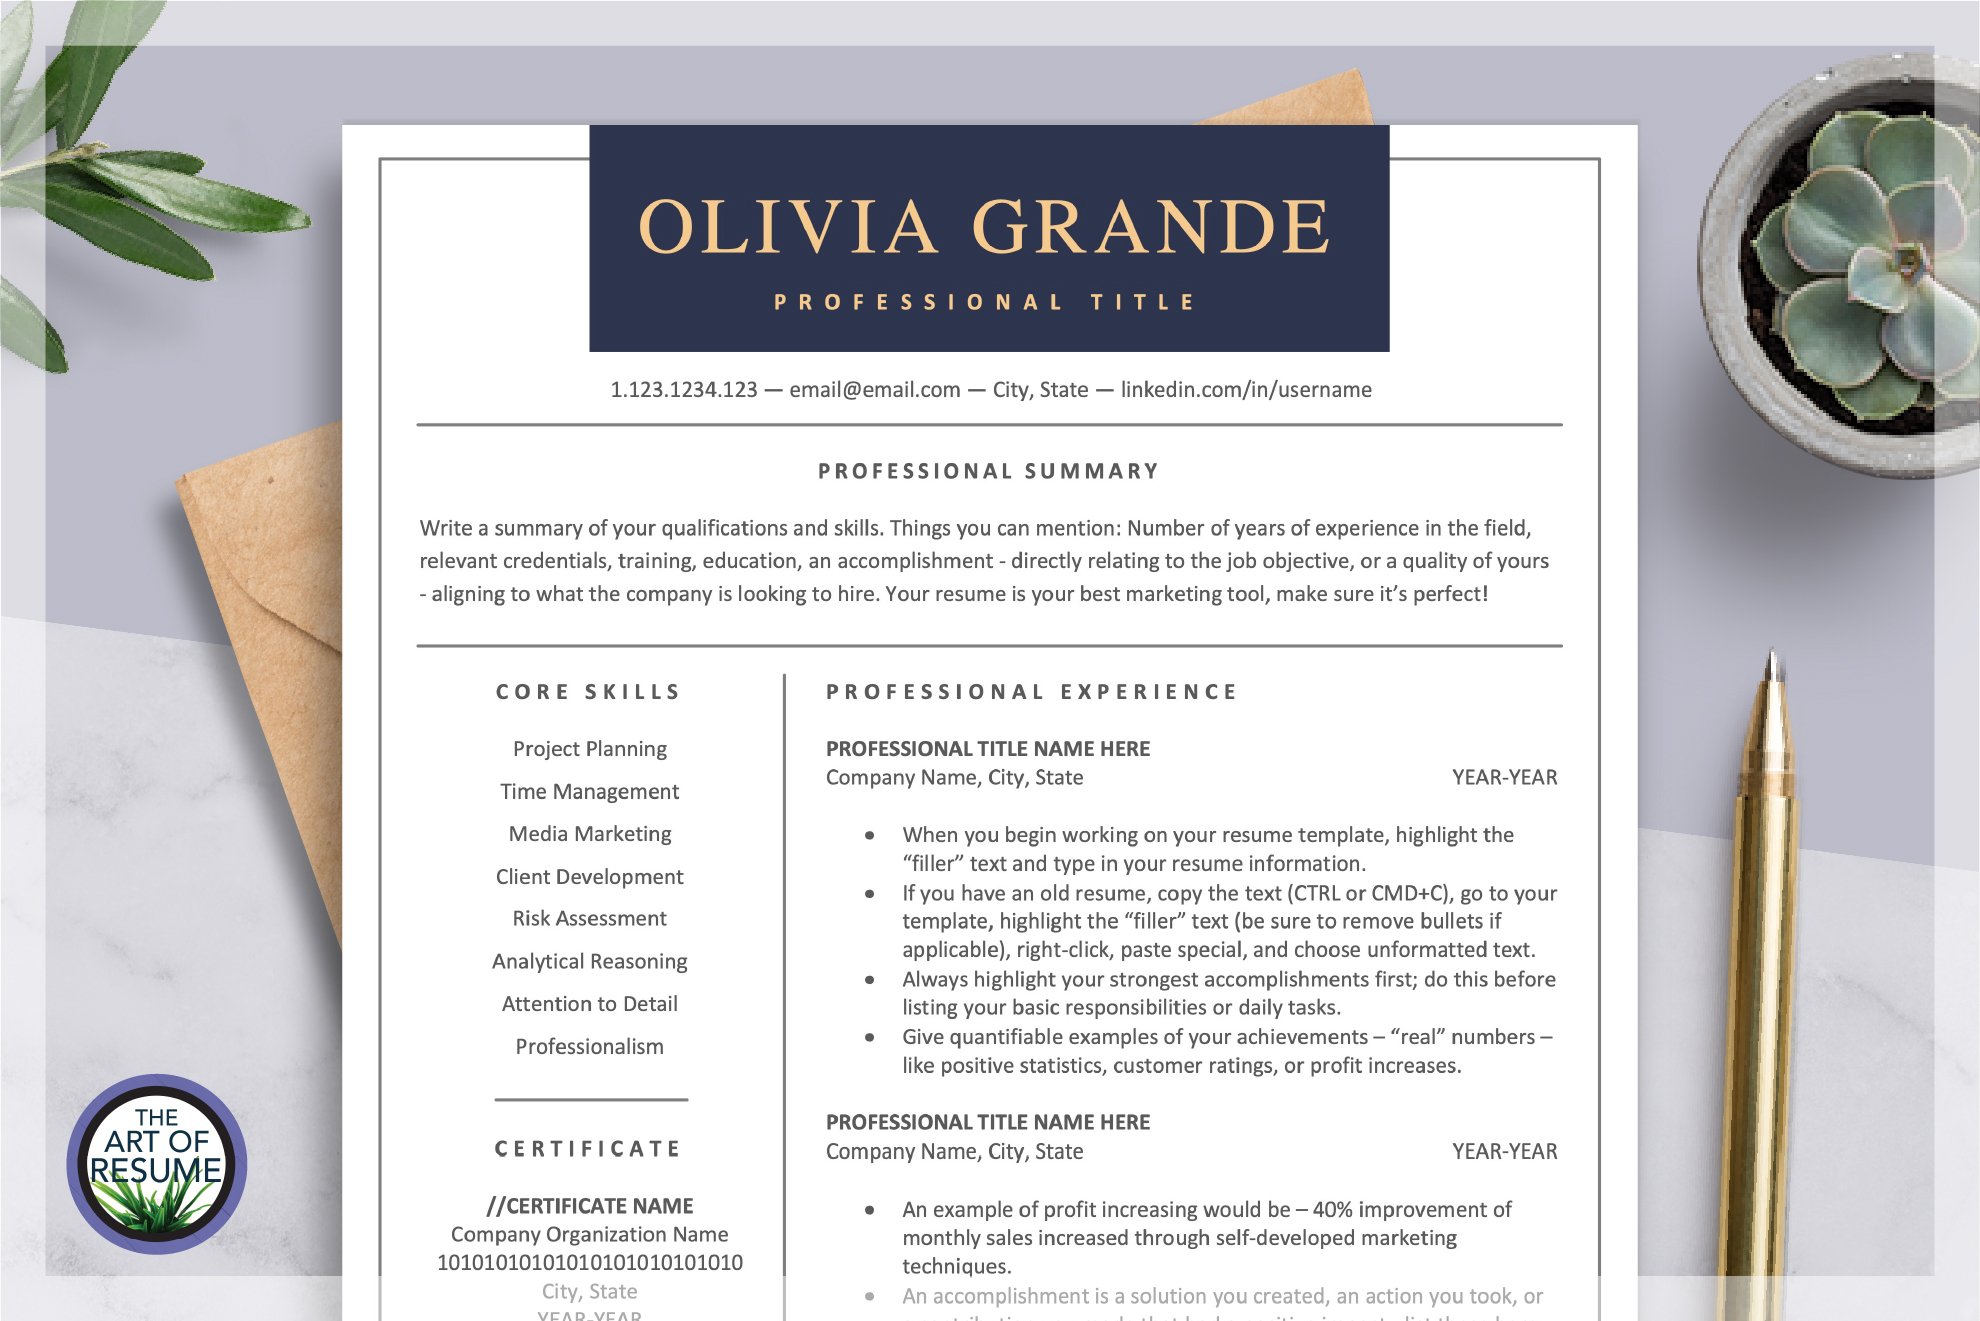 Editable Resume CV Template Design cover image.